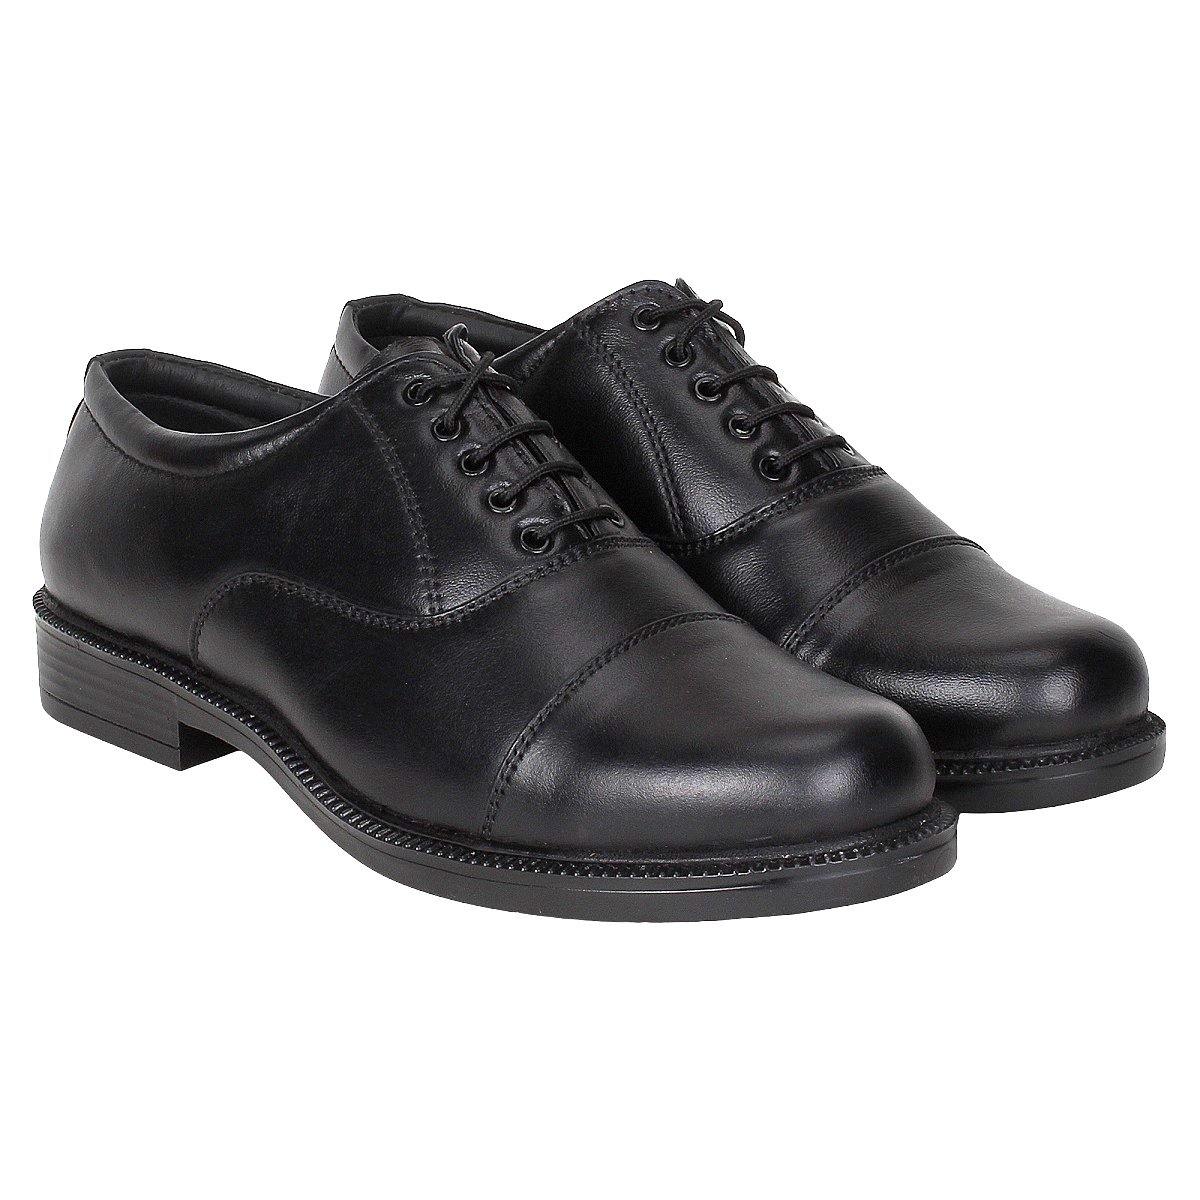 Police Shoes for Men - SeeandWear